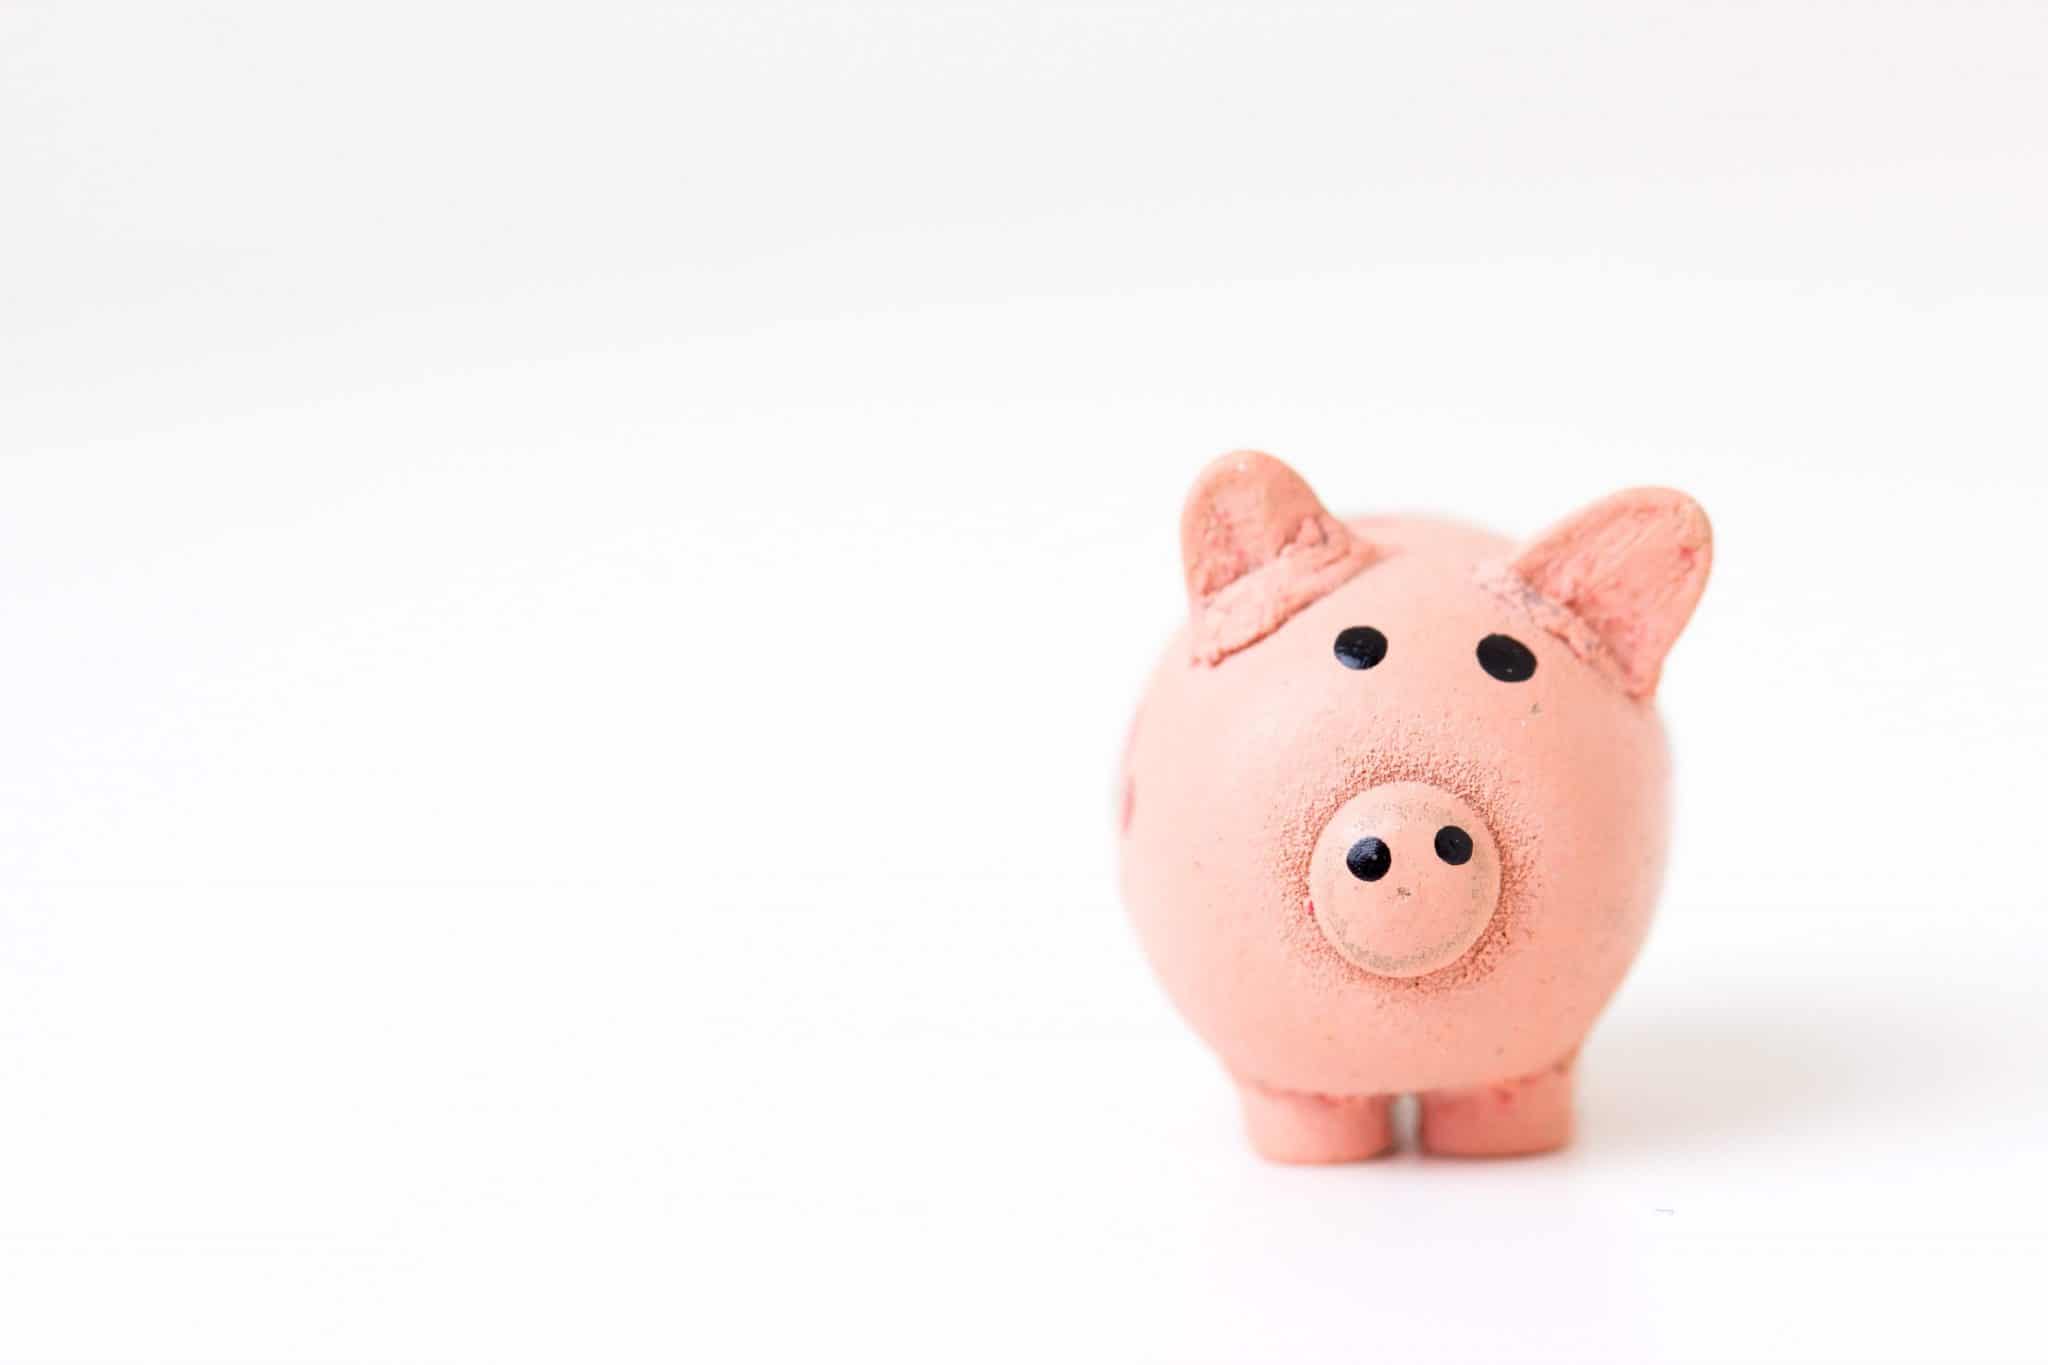 Piggy bank to save college money